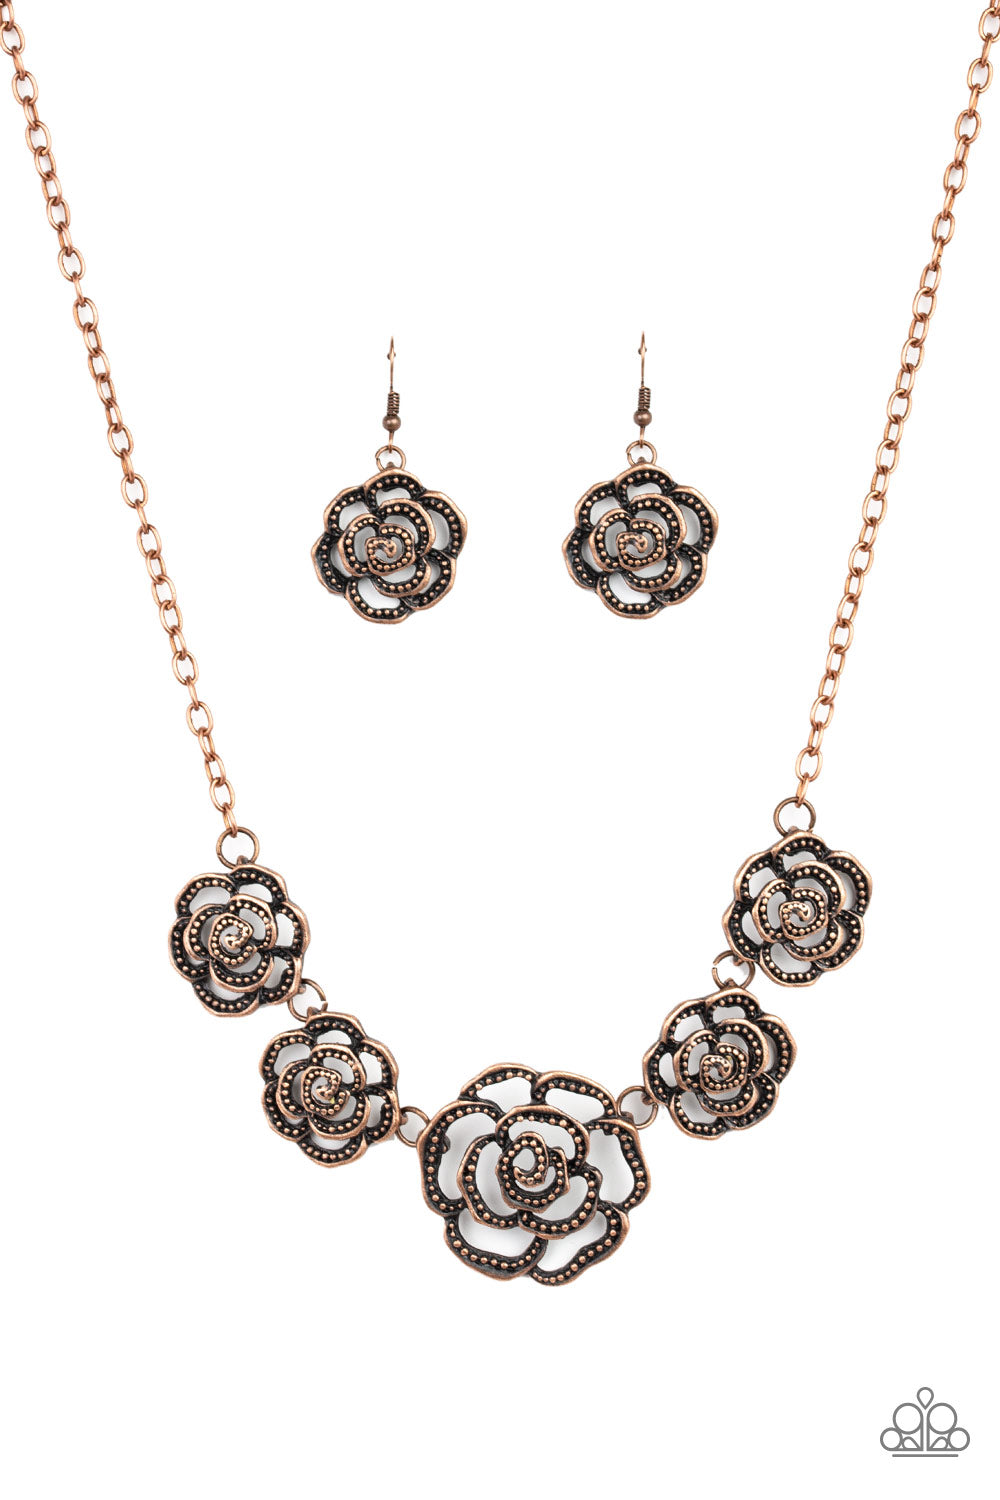 Primrose Princess - Copper necklace